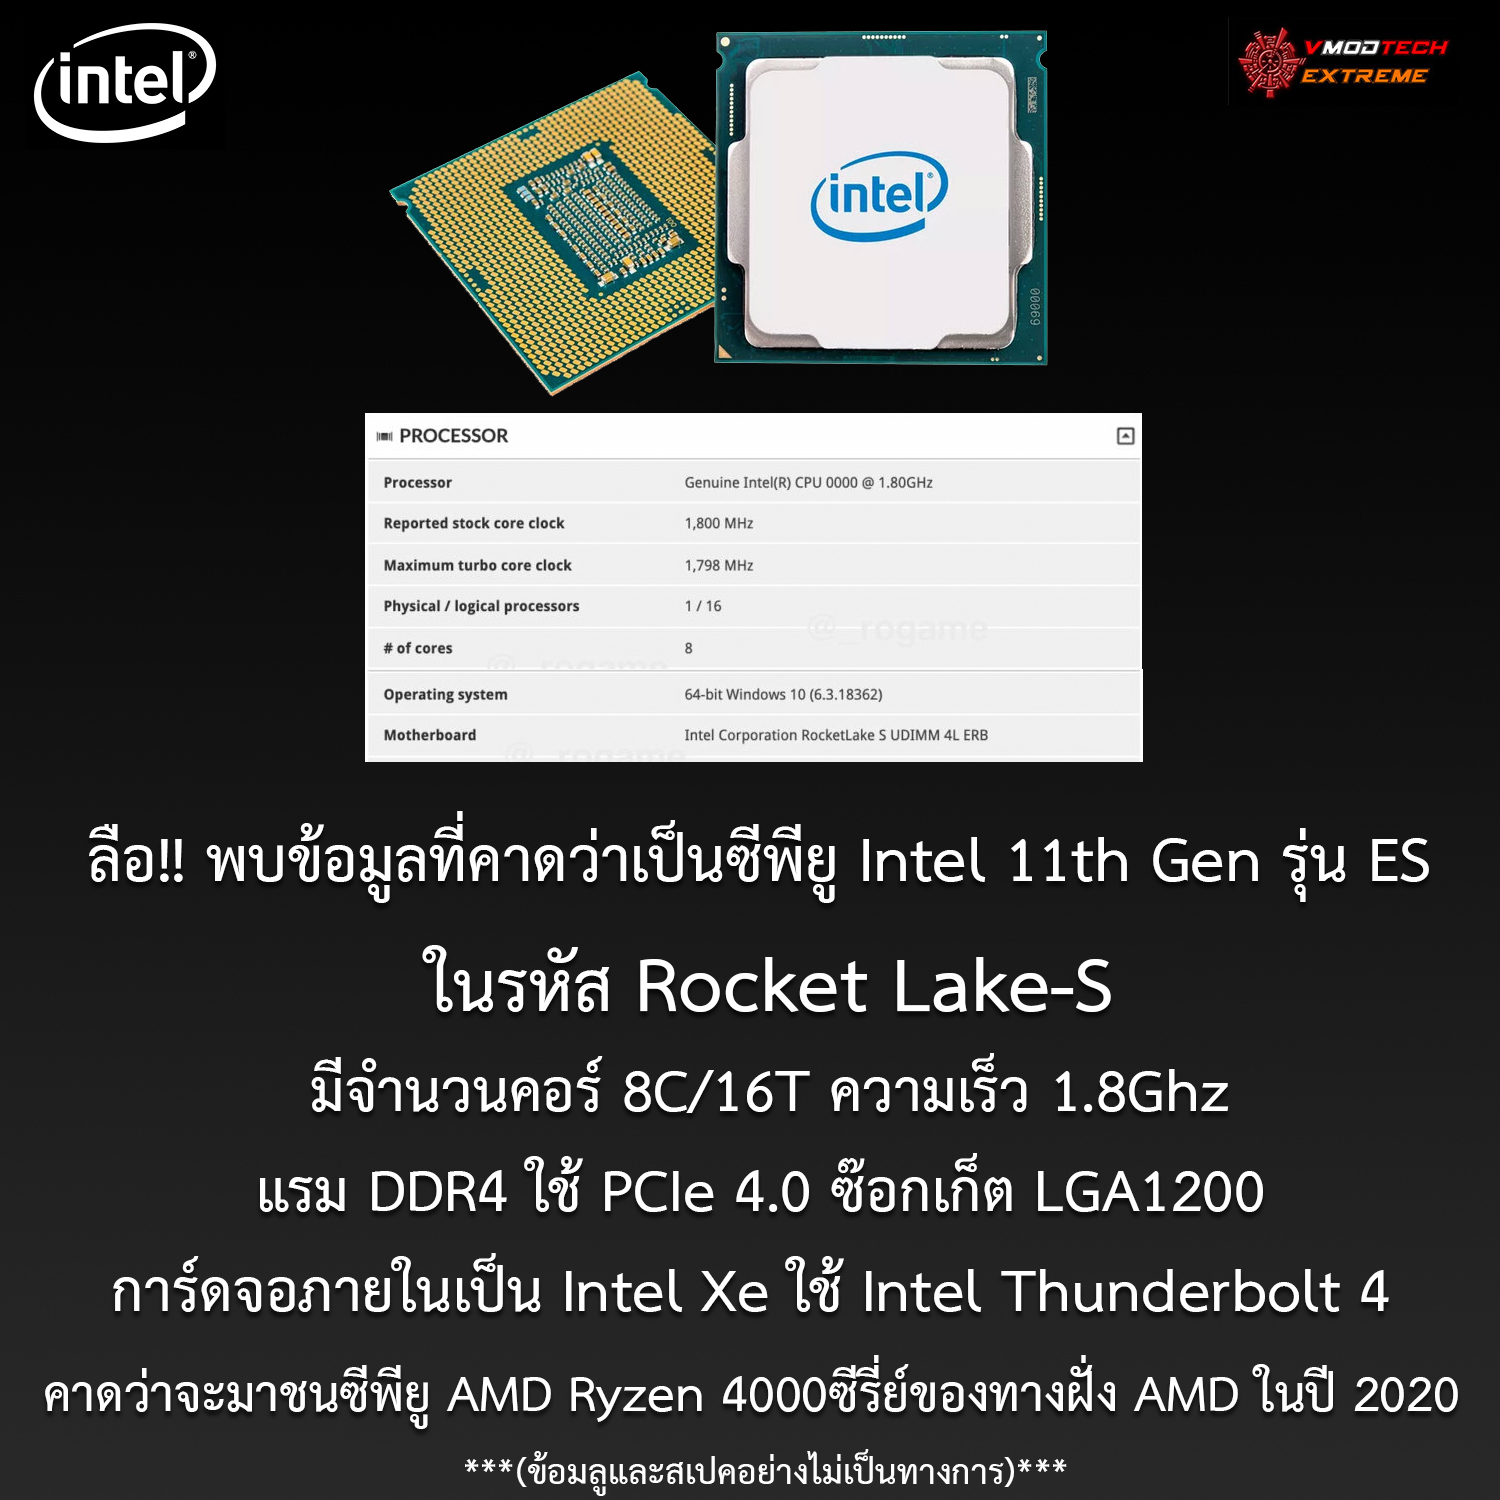 intel rocket lake s 11th gen 2020 ลือ!! พบข้อมูลที่คาดว่าเป็นซีพียู Intel 11th Gen รุ่น ES ในรหัส Rocket Lake S คาดว่าจะมาชนซีพียู AMD Ryzen 4000ซีรี่ย์ของทางฝั่ง AMD ในปี 2020